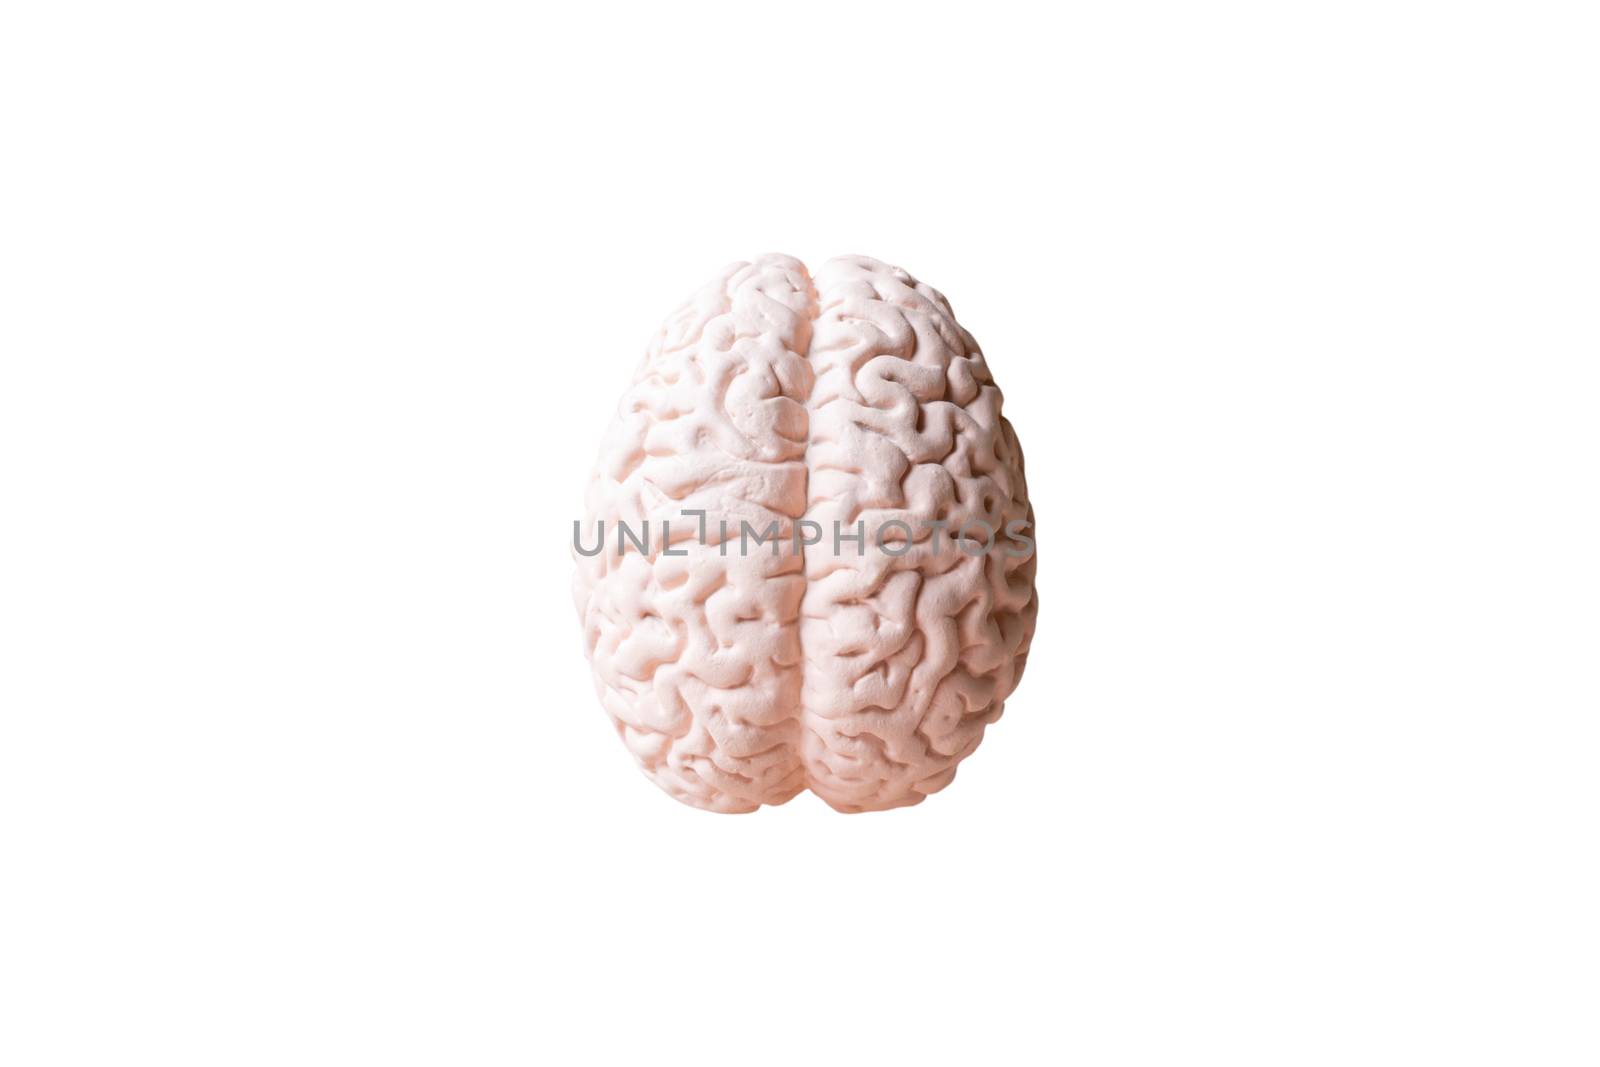 Human brain Anatomical Model isolated on white background by sirichaiyaymicro